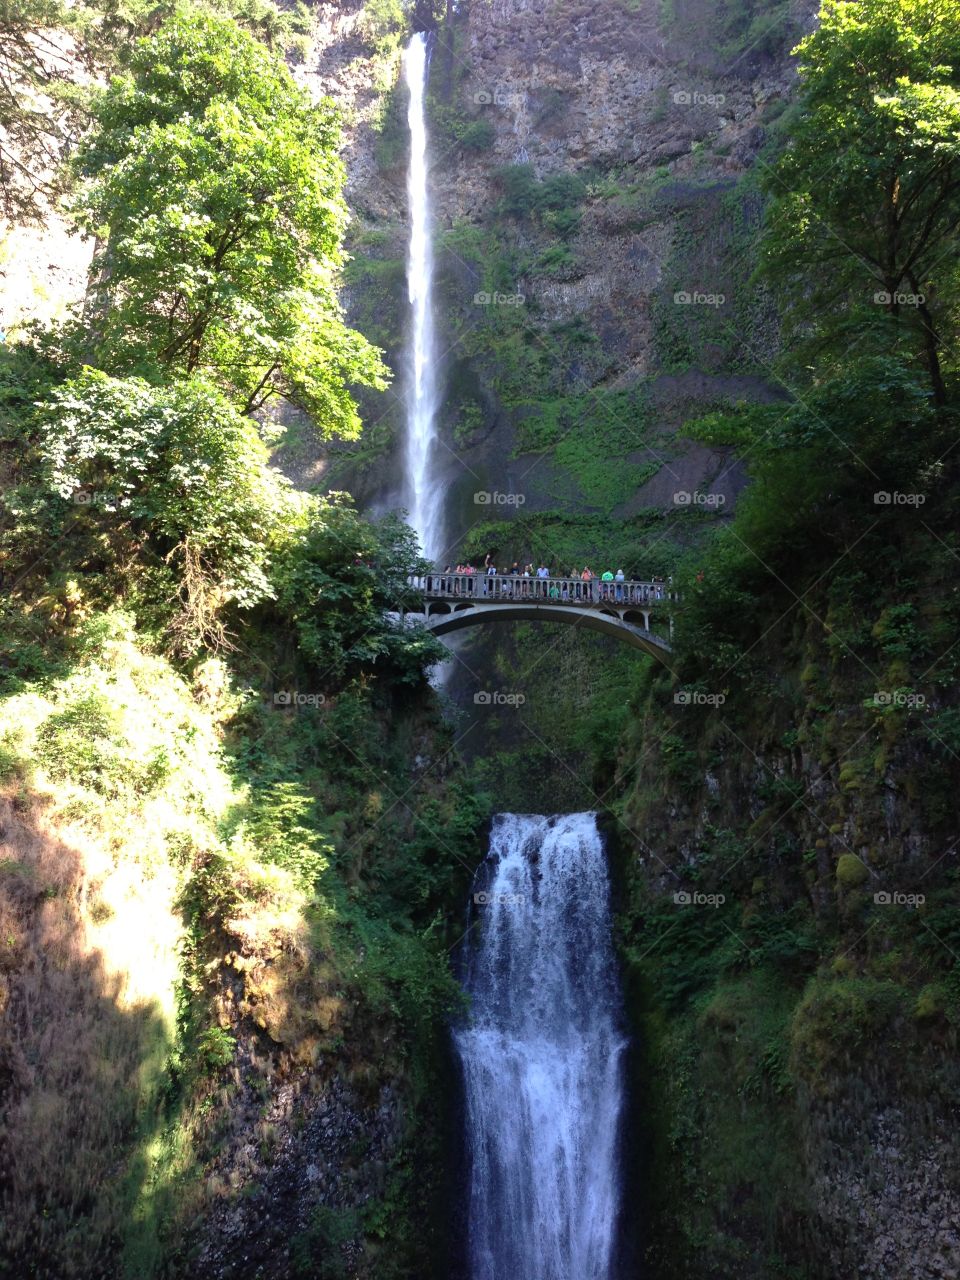 Multnomah Falls outside of Portland, OR.